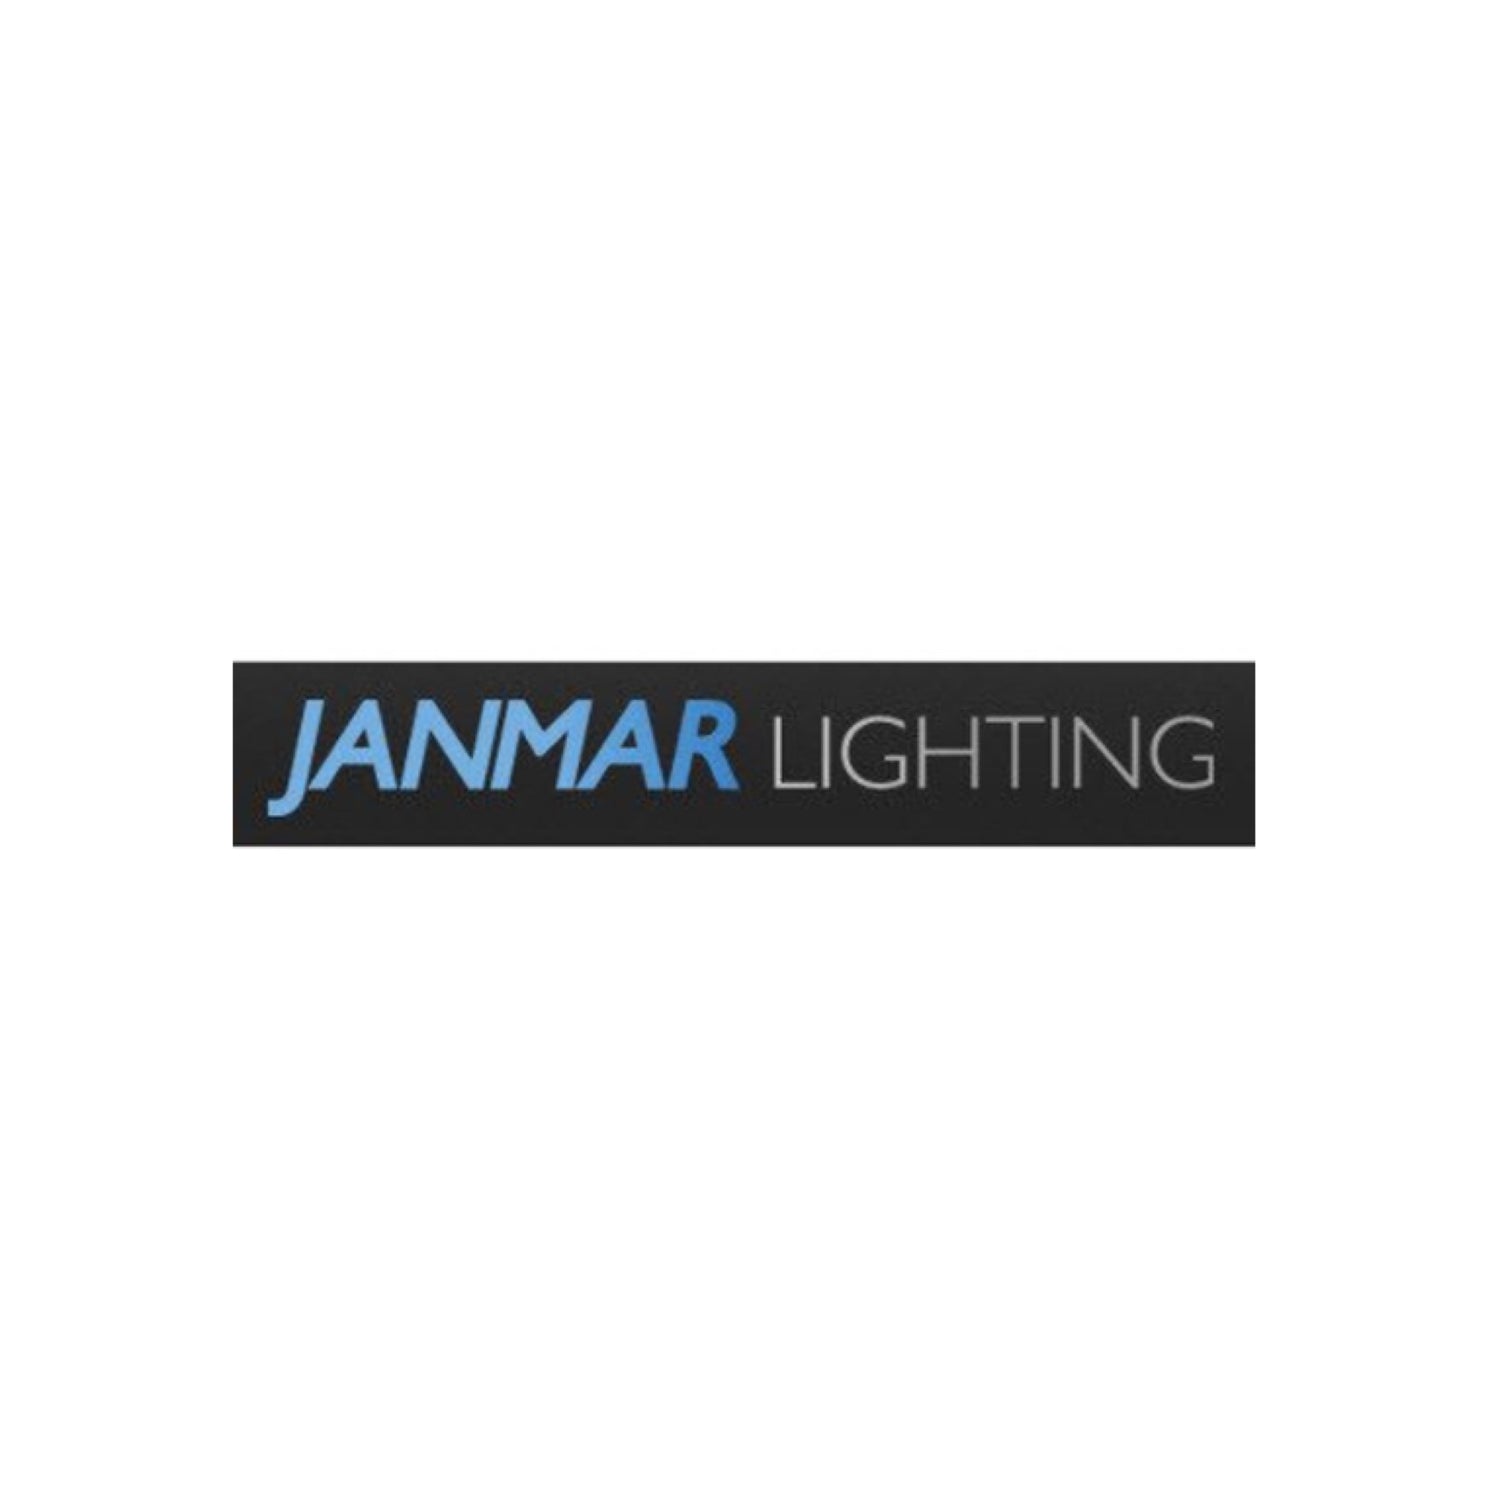 JANMAR LIGHTING